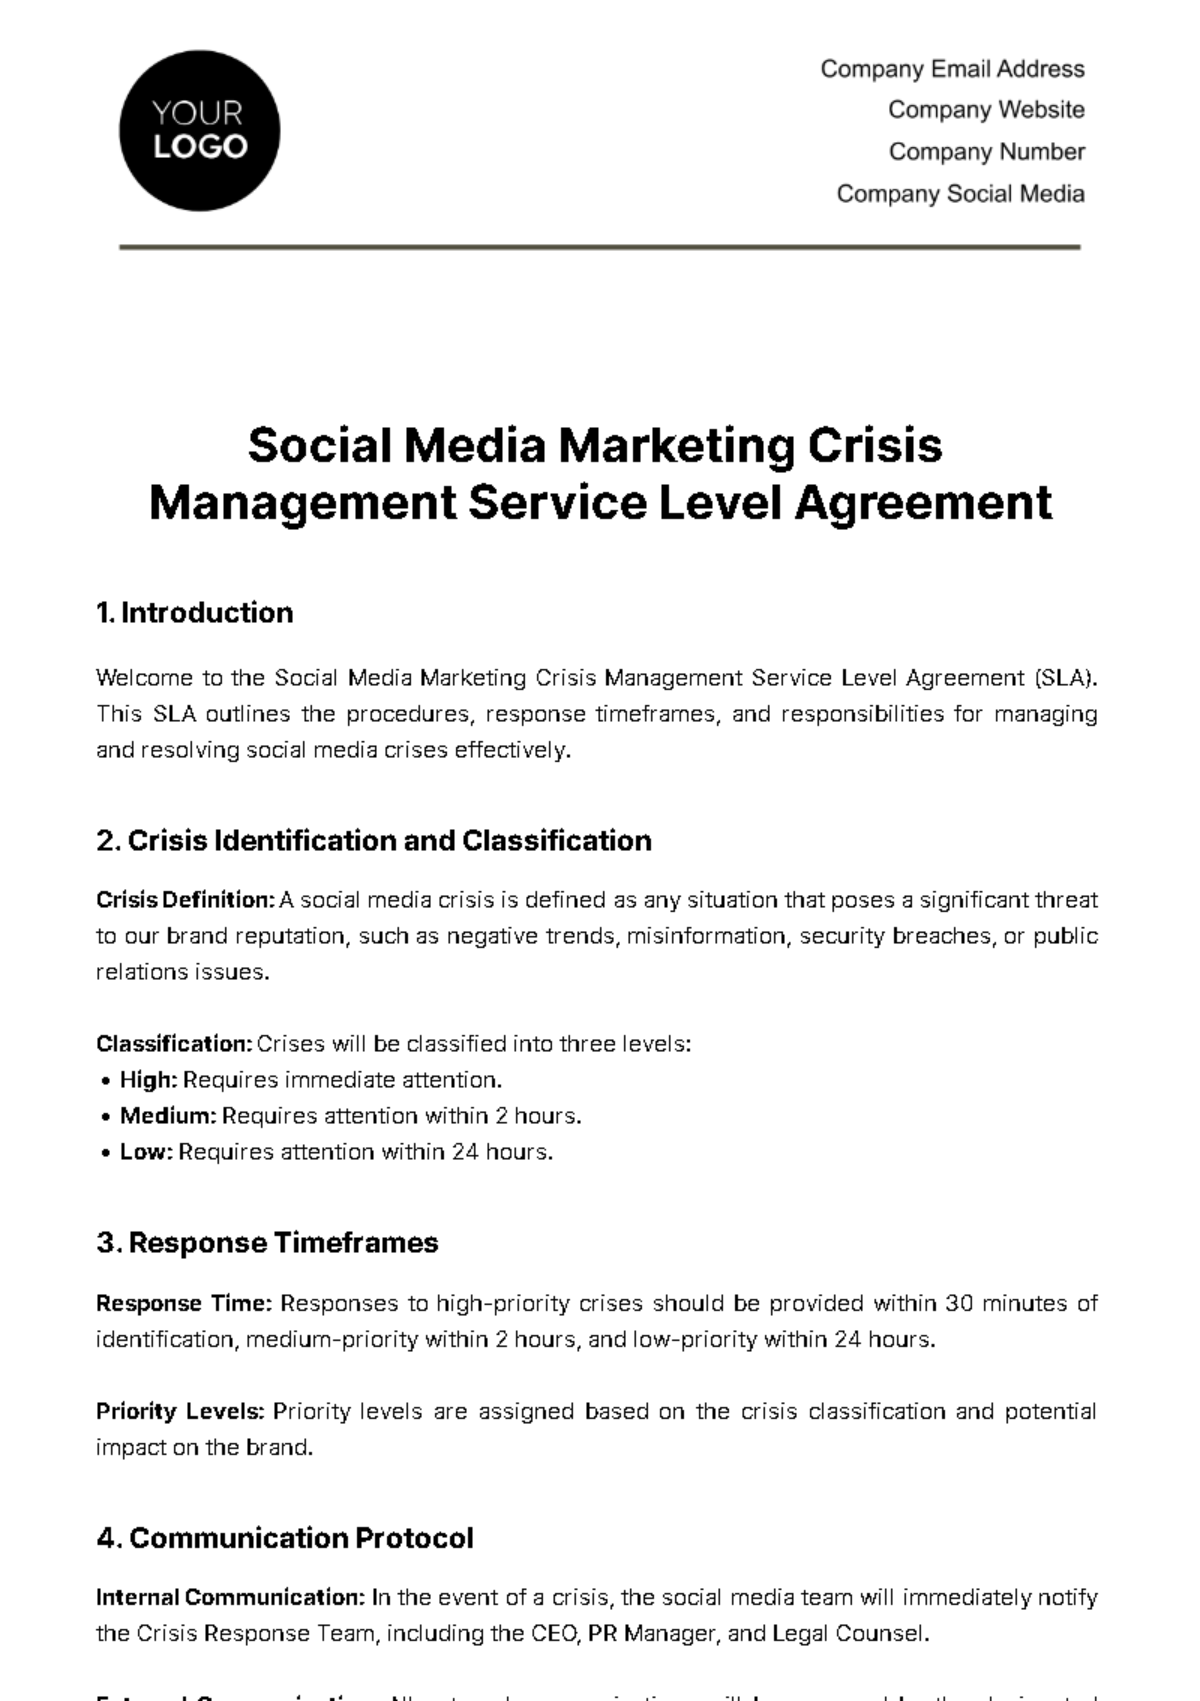 Social Media Marketing Crisis Management SLA Template